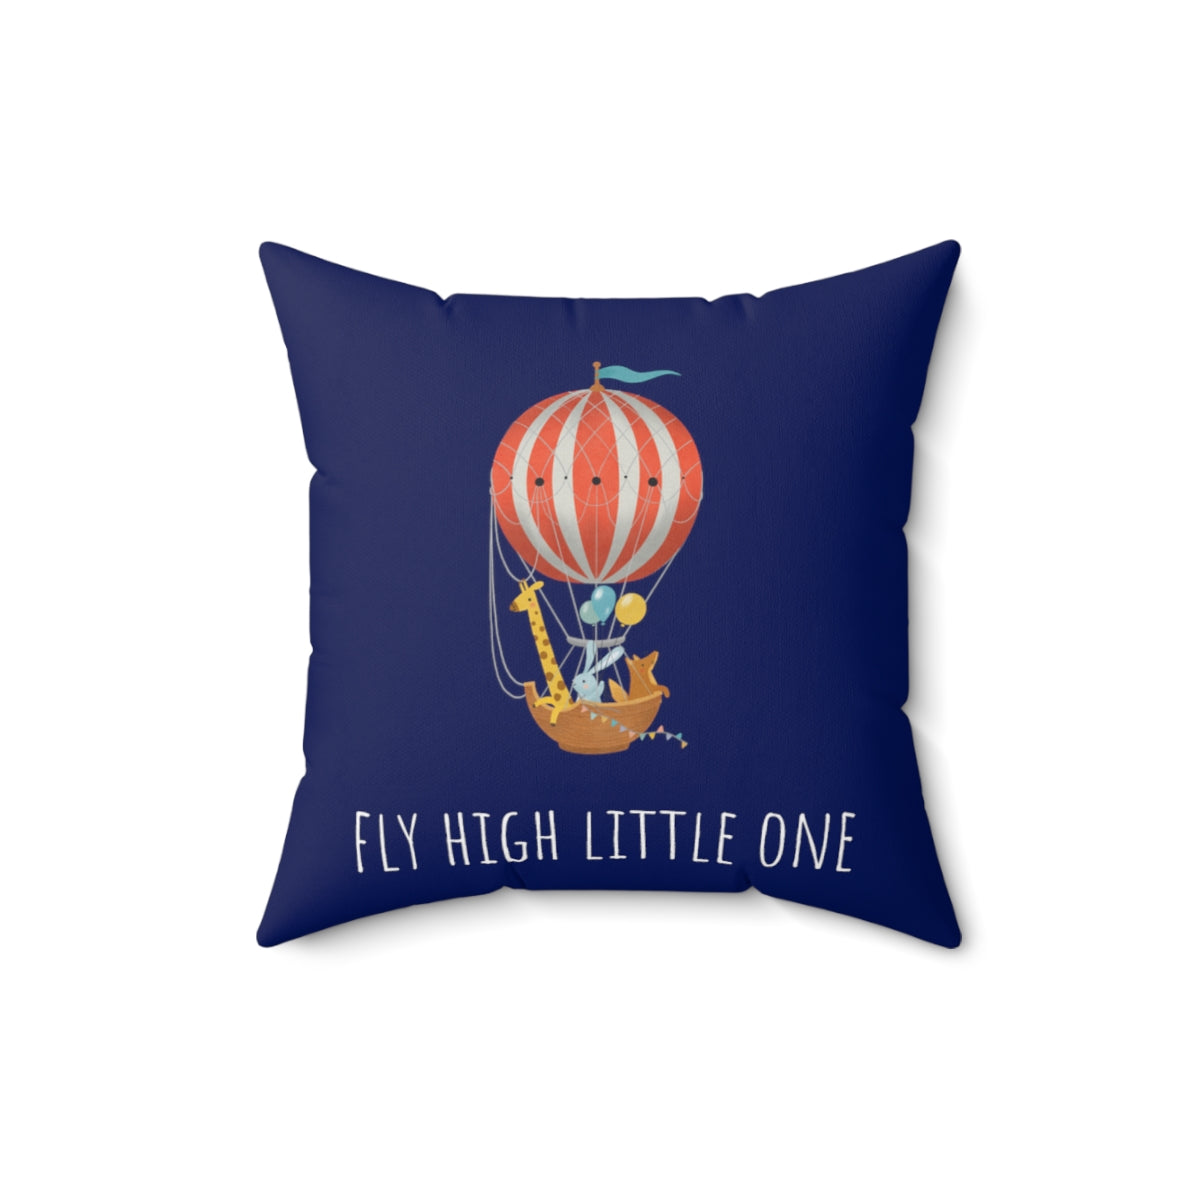 Safari Party Nursery Pillow, Personalized Baby Gift, Hot Air Ballon Pillow